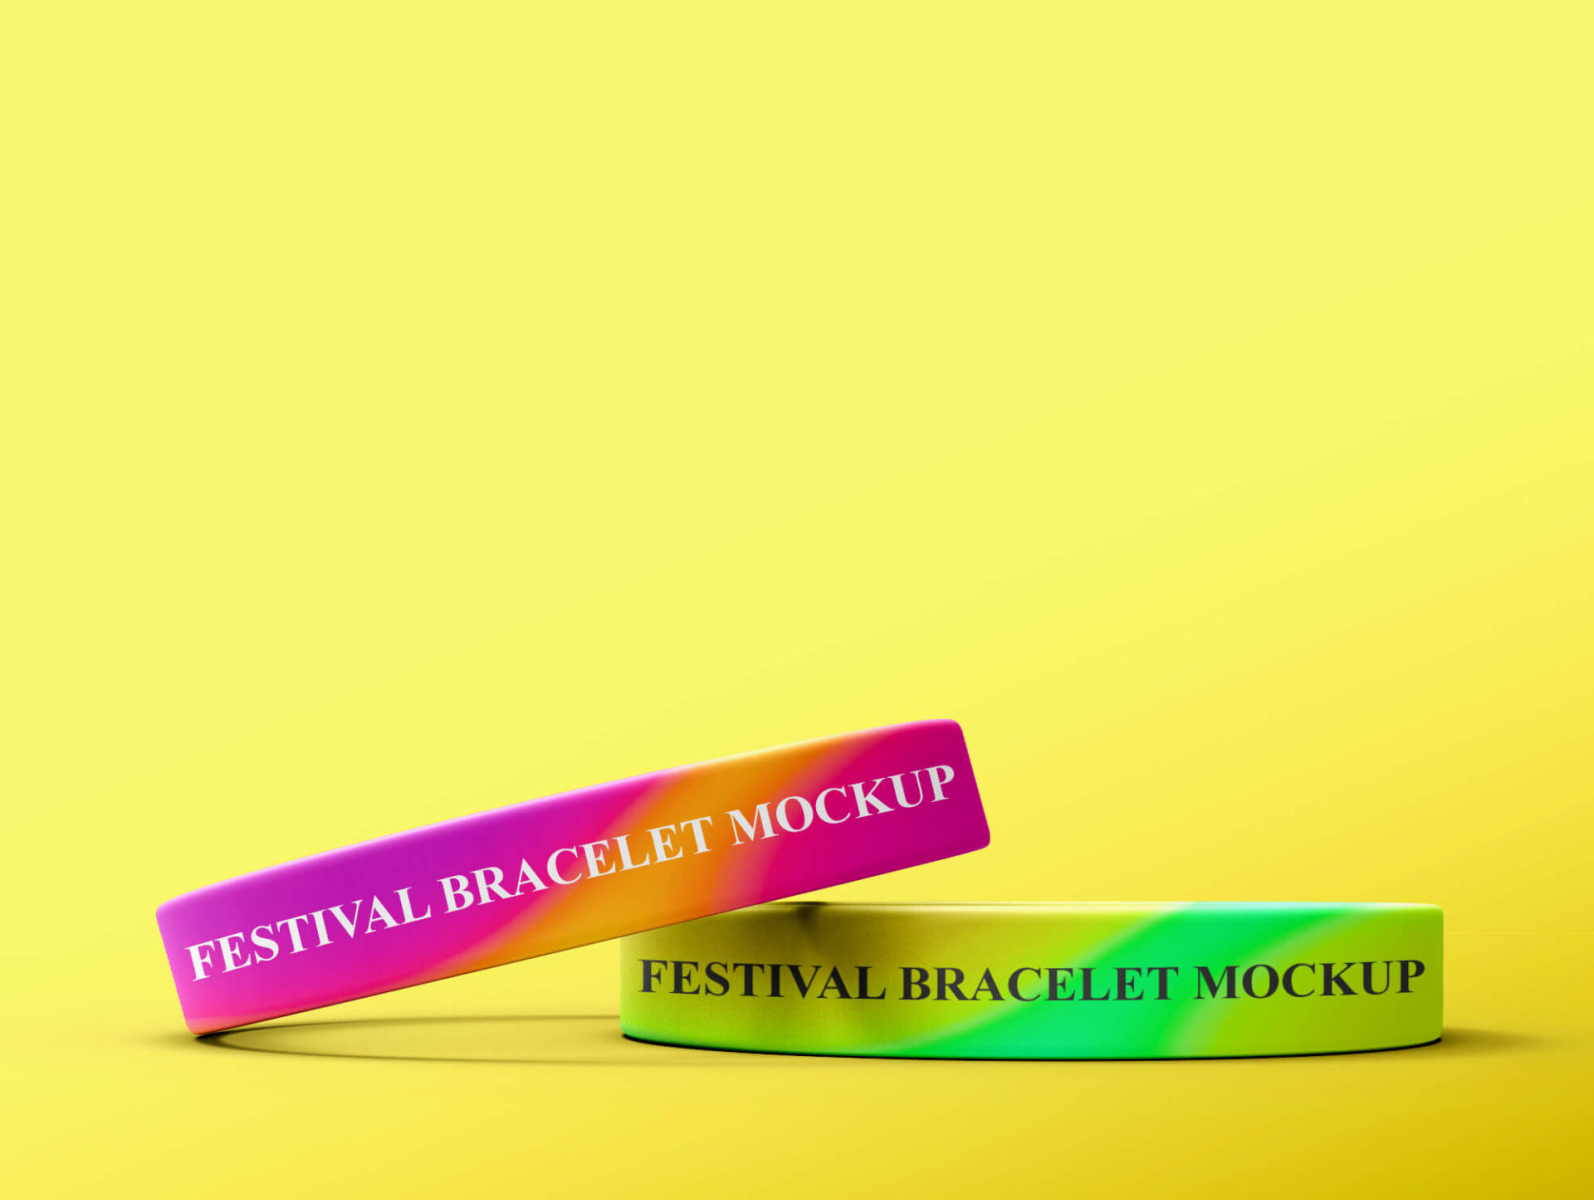 Download Free Festival Bracelet Mockup Psd Template By Mockup Den On Dribbble